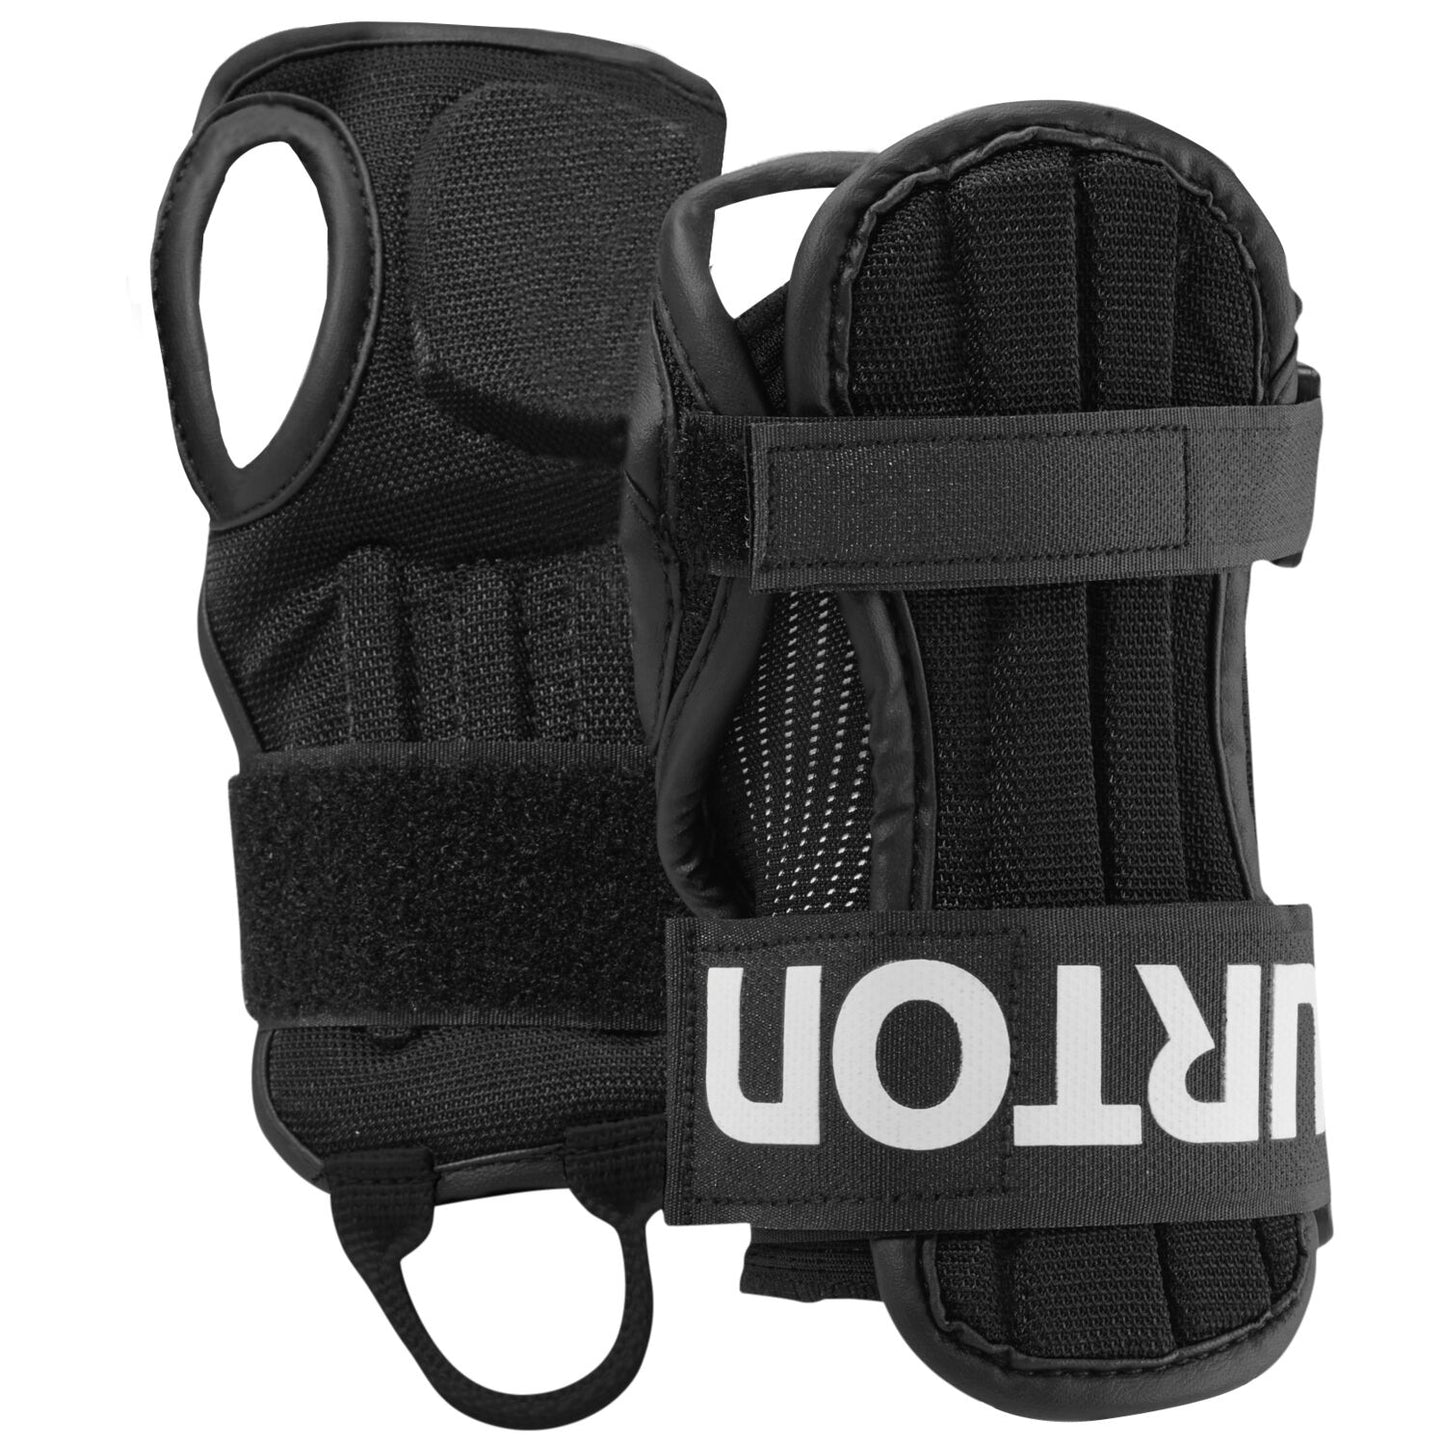 Men's Burton Impact Wrist Guard True Black Protective Gear